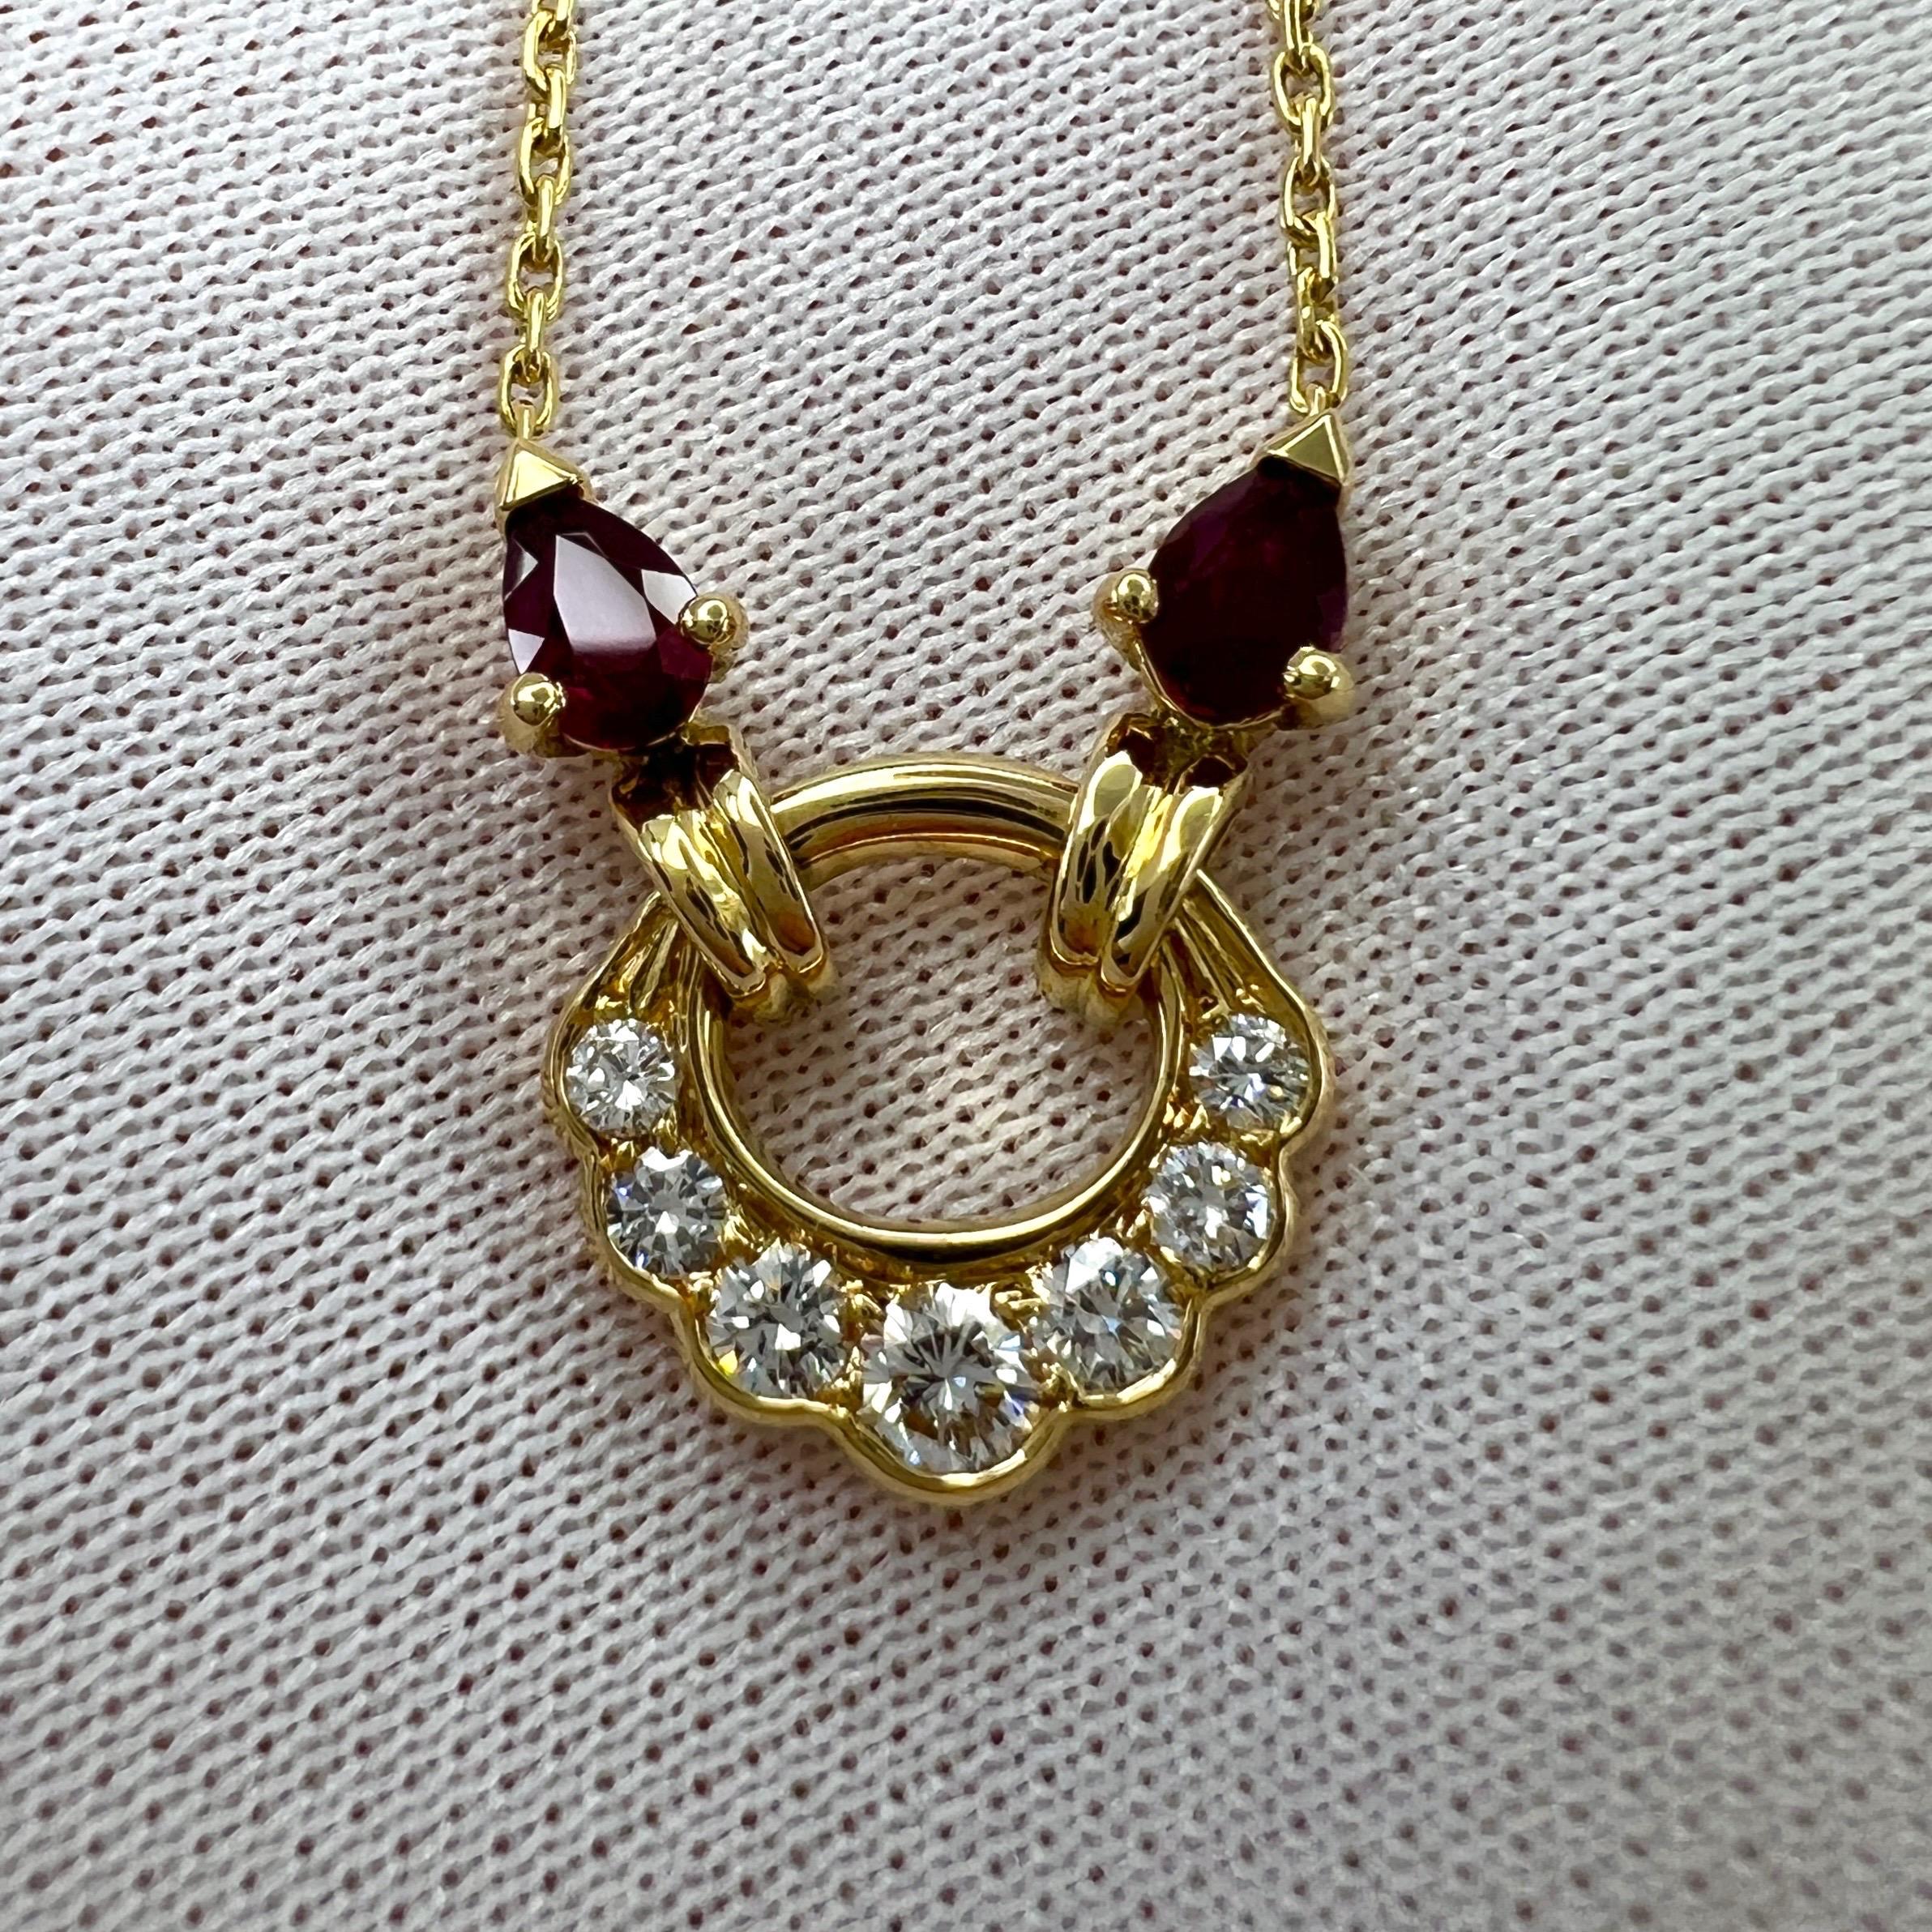 Rare Vintage Van Cleef & Arpels Ruby Diamond 18k Yellow Gold Pendant Necklace For Sale 6